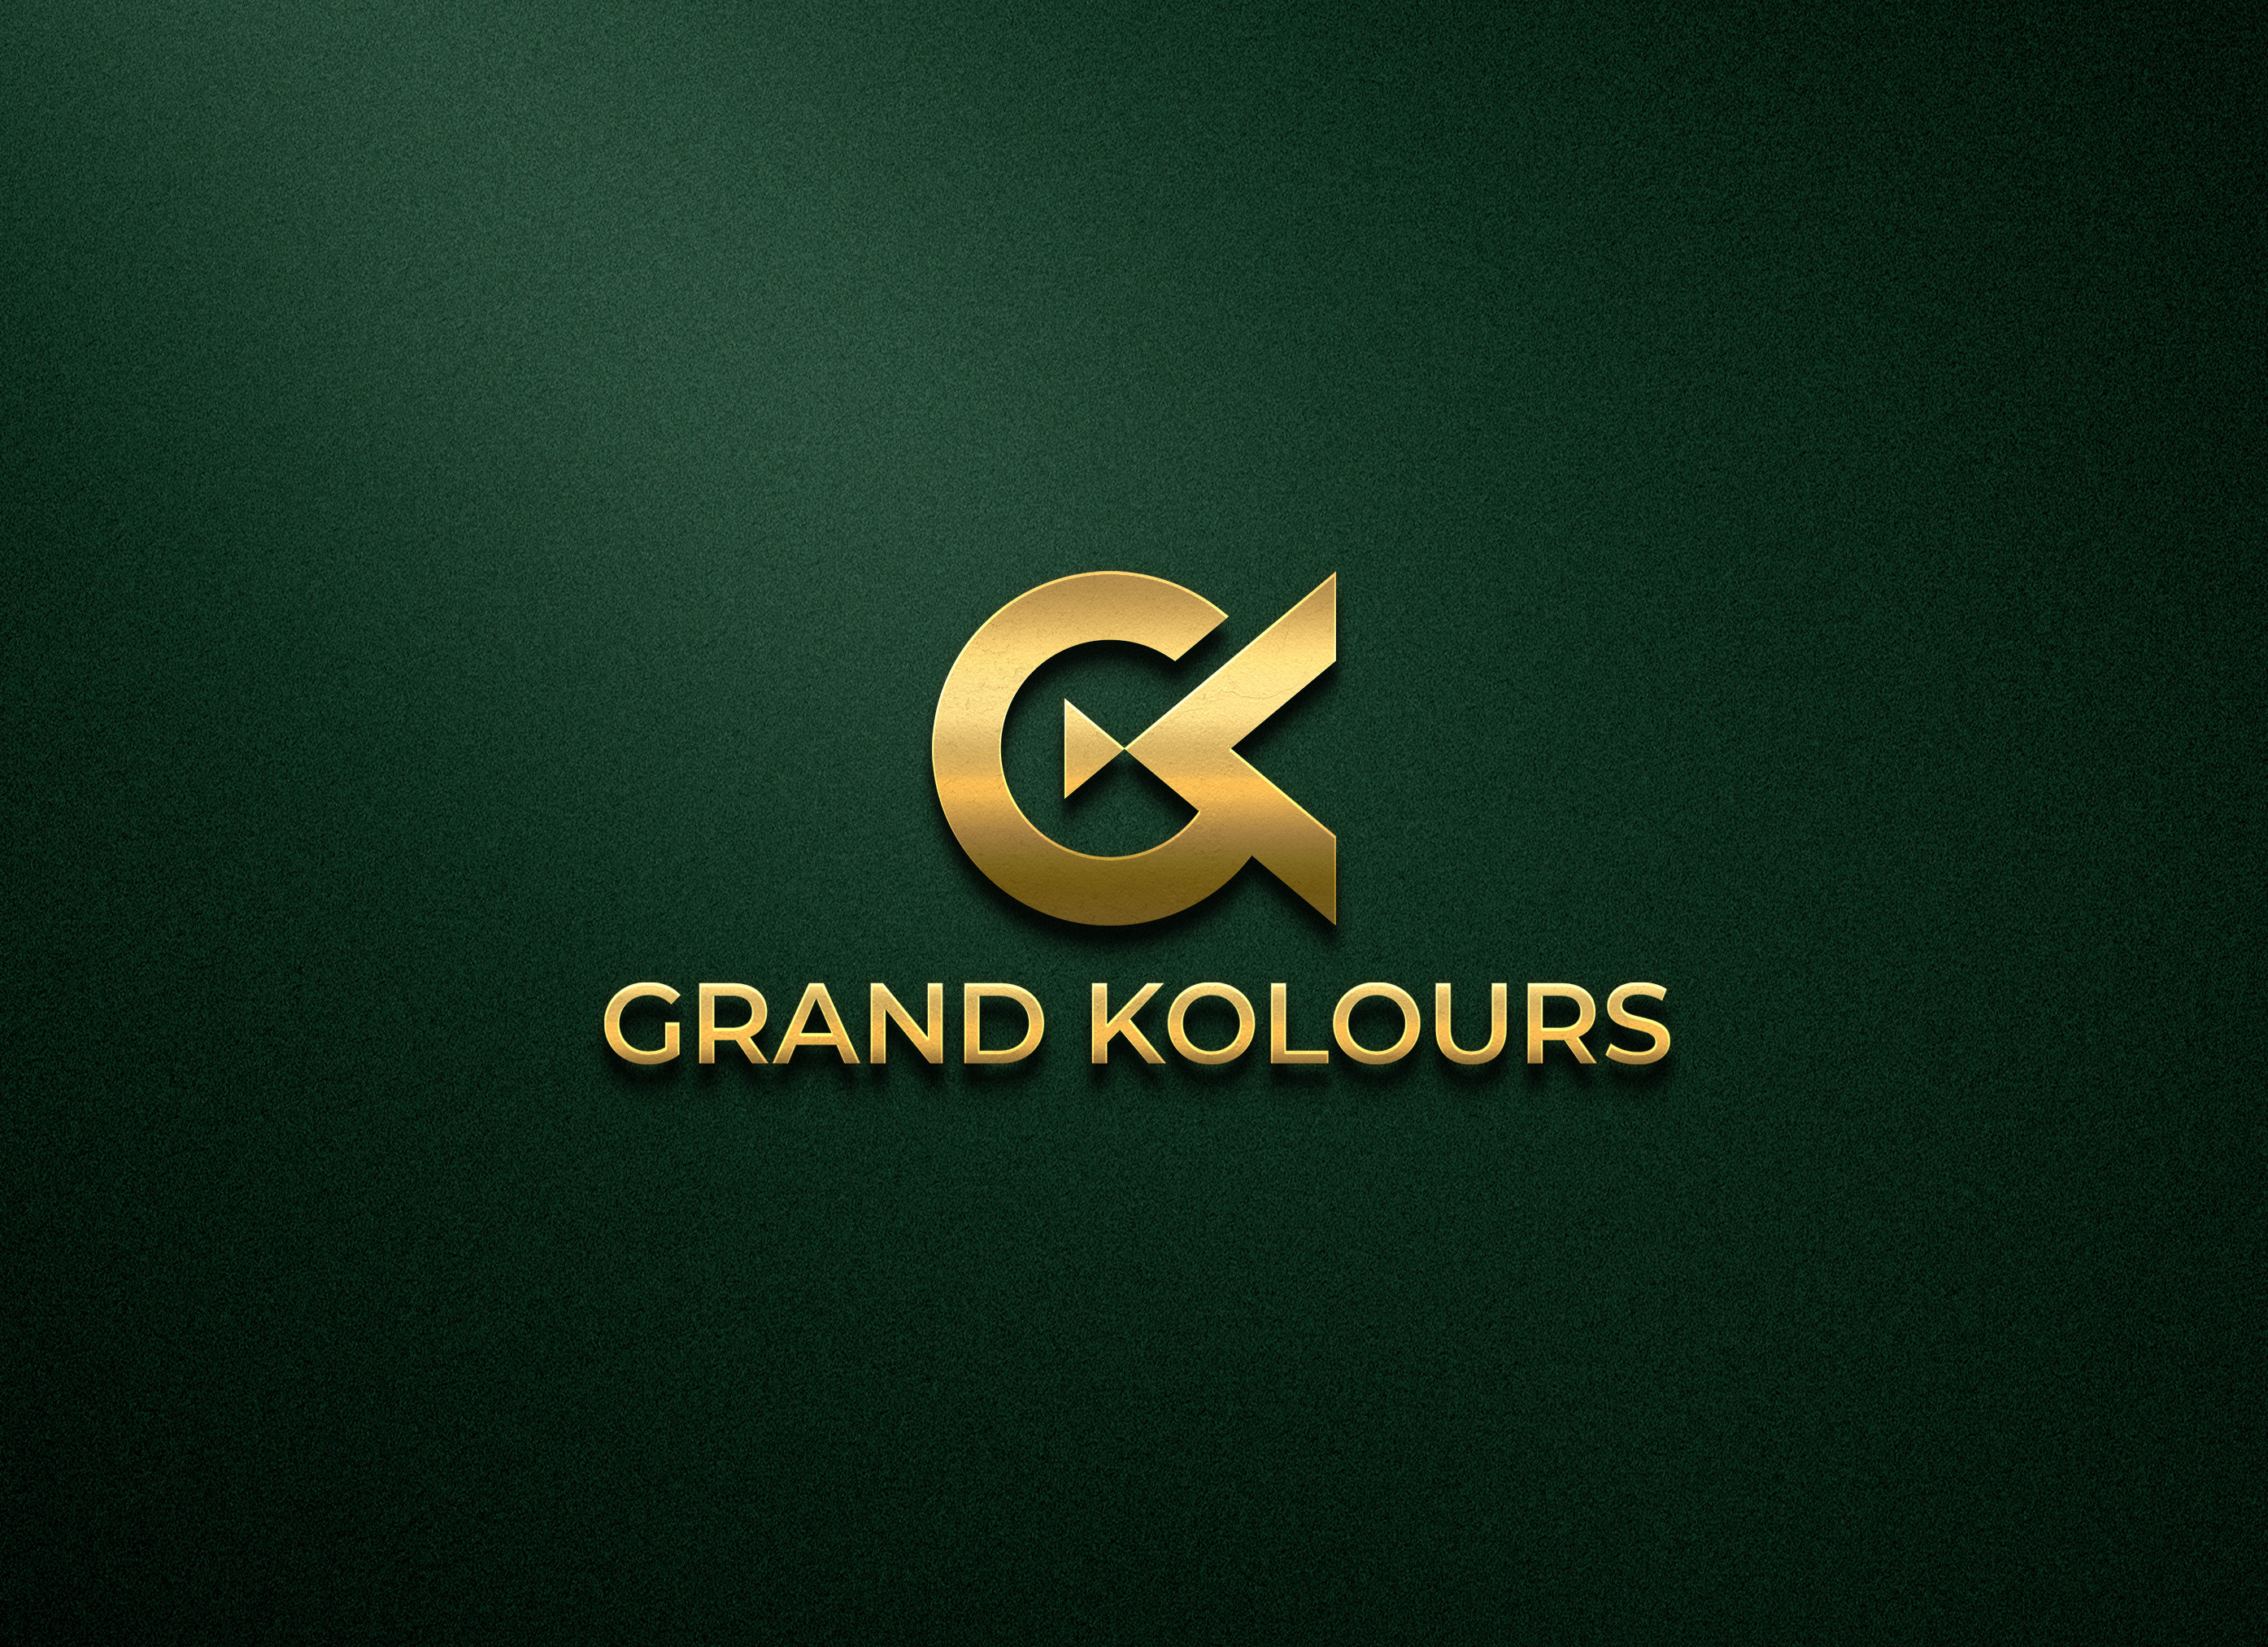 Grand Kolours Home Cinemas